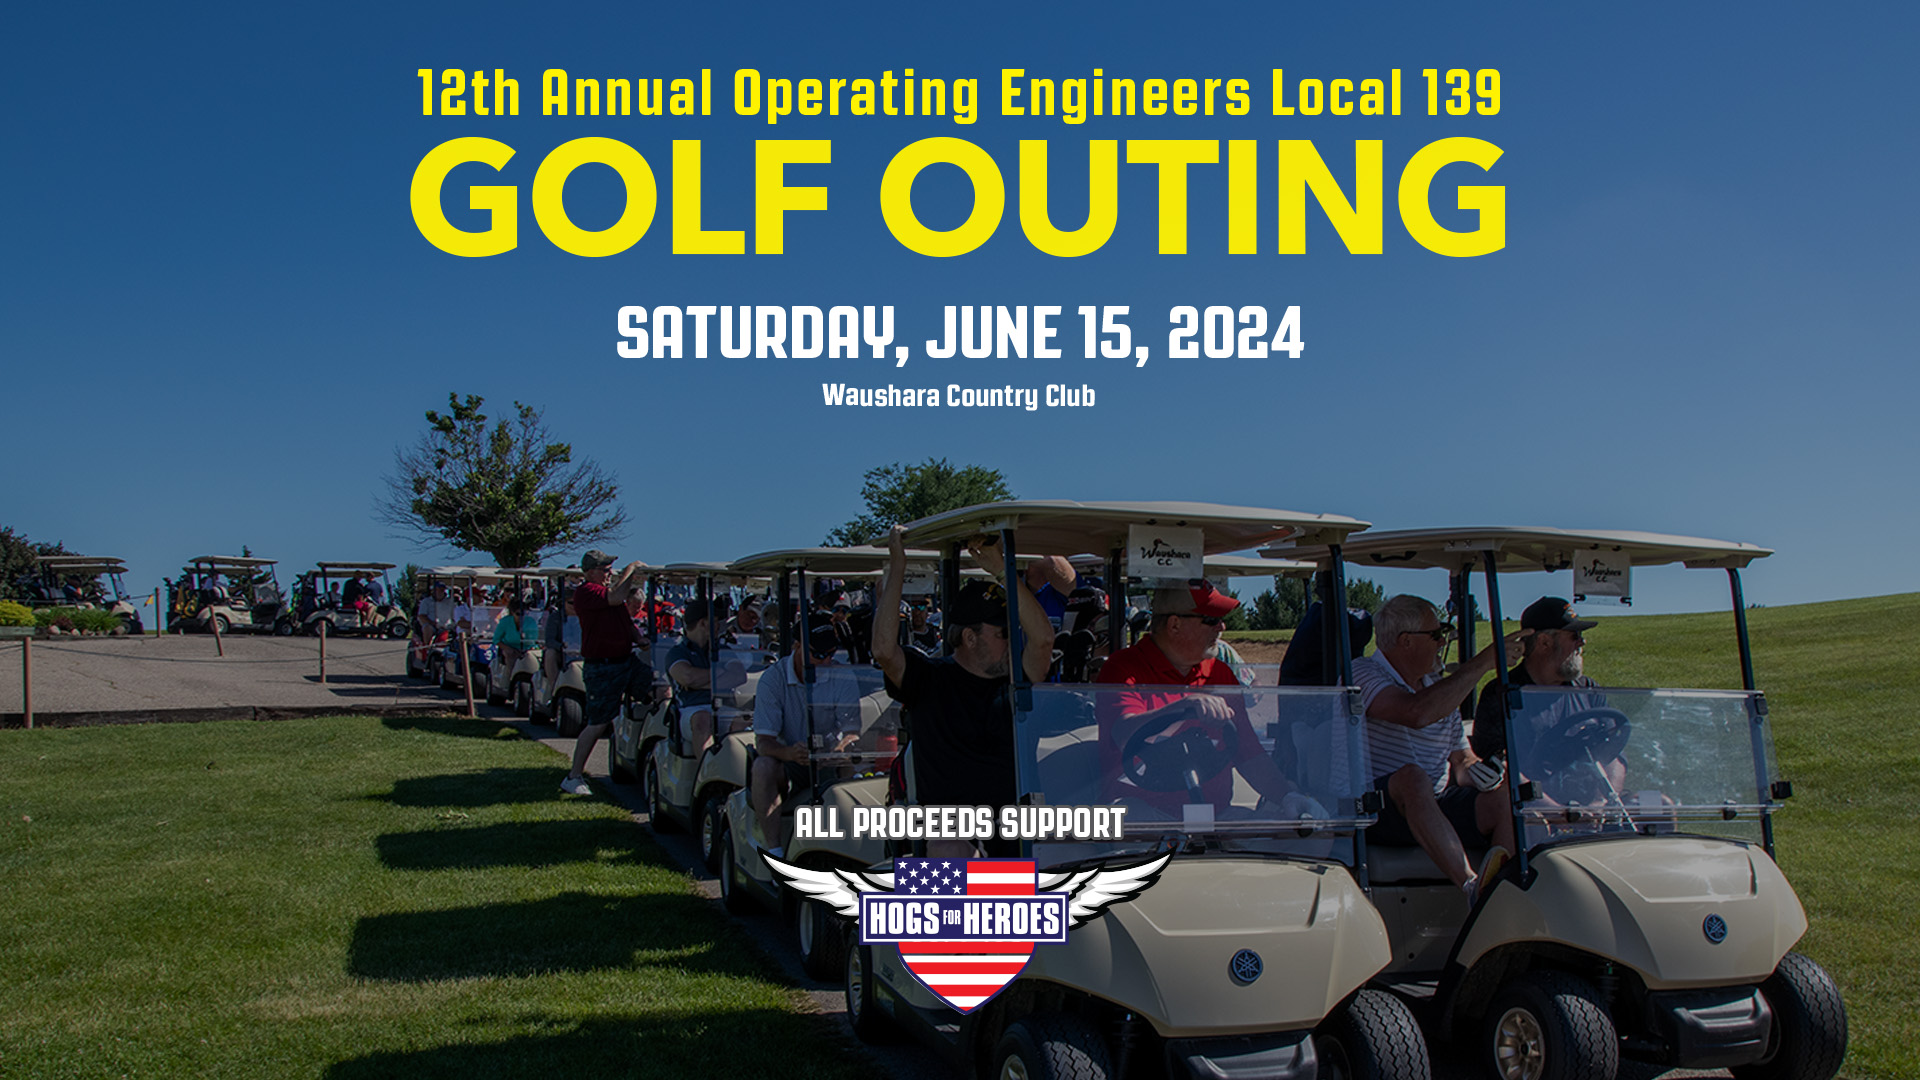 12th Annual Golf Outing, June 15, 2024, Waushara Country Club